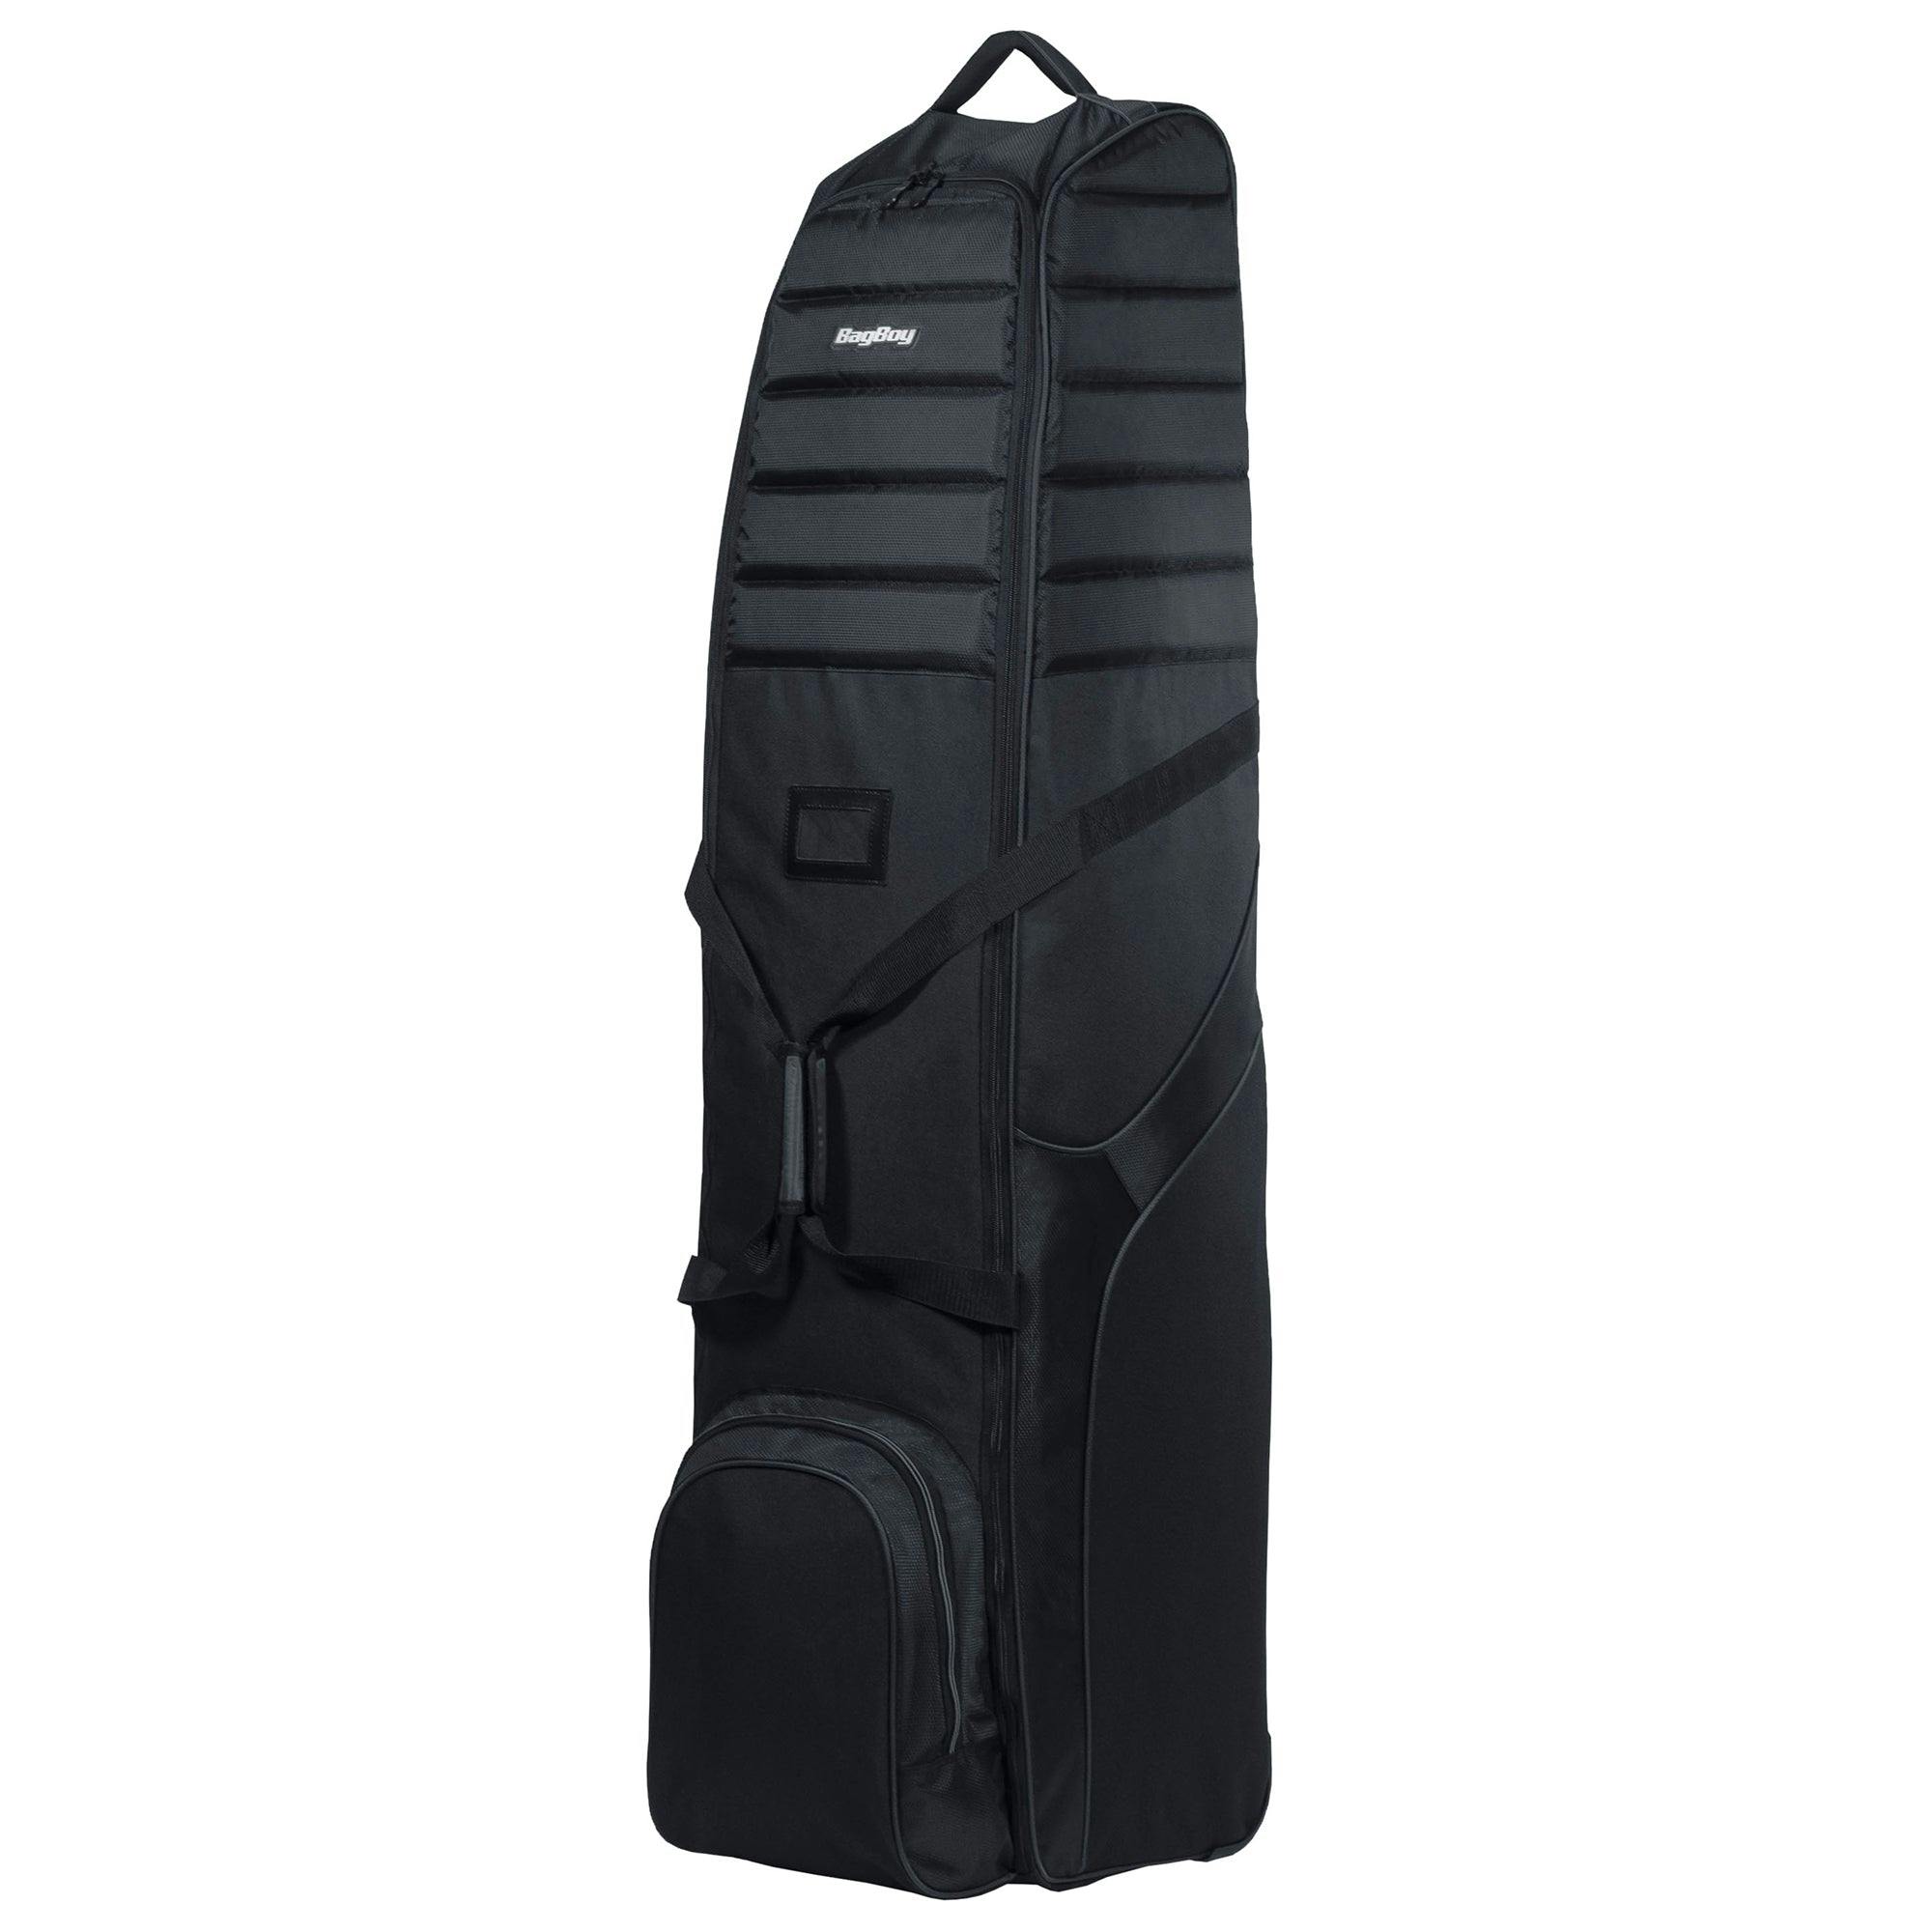 Bag Boy T-660 Golf Bag Travel Cover · Black/Charcoal